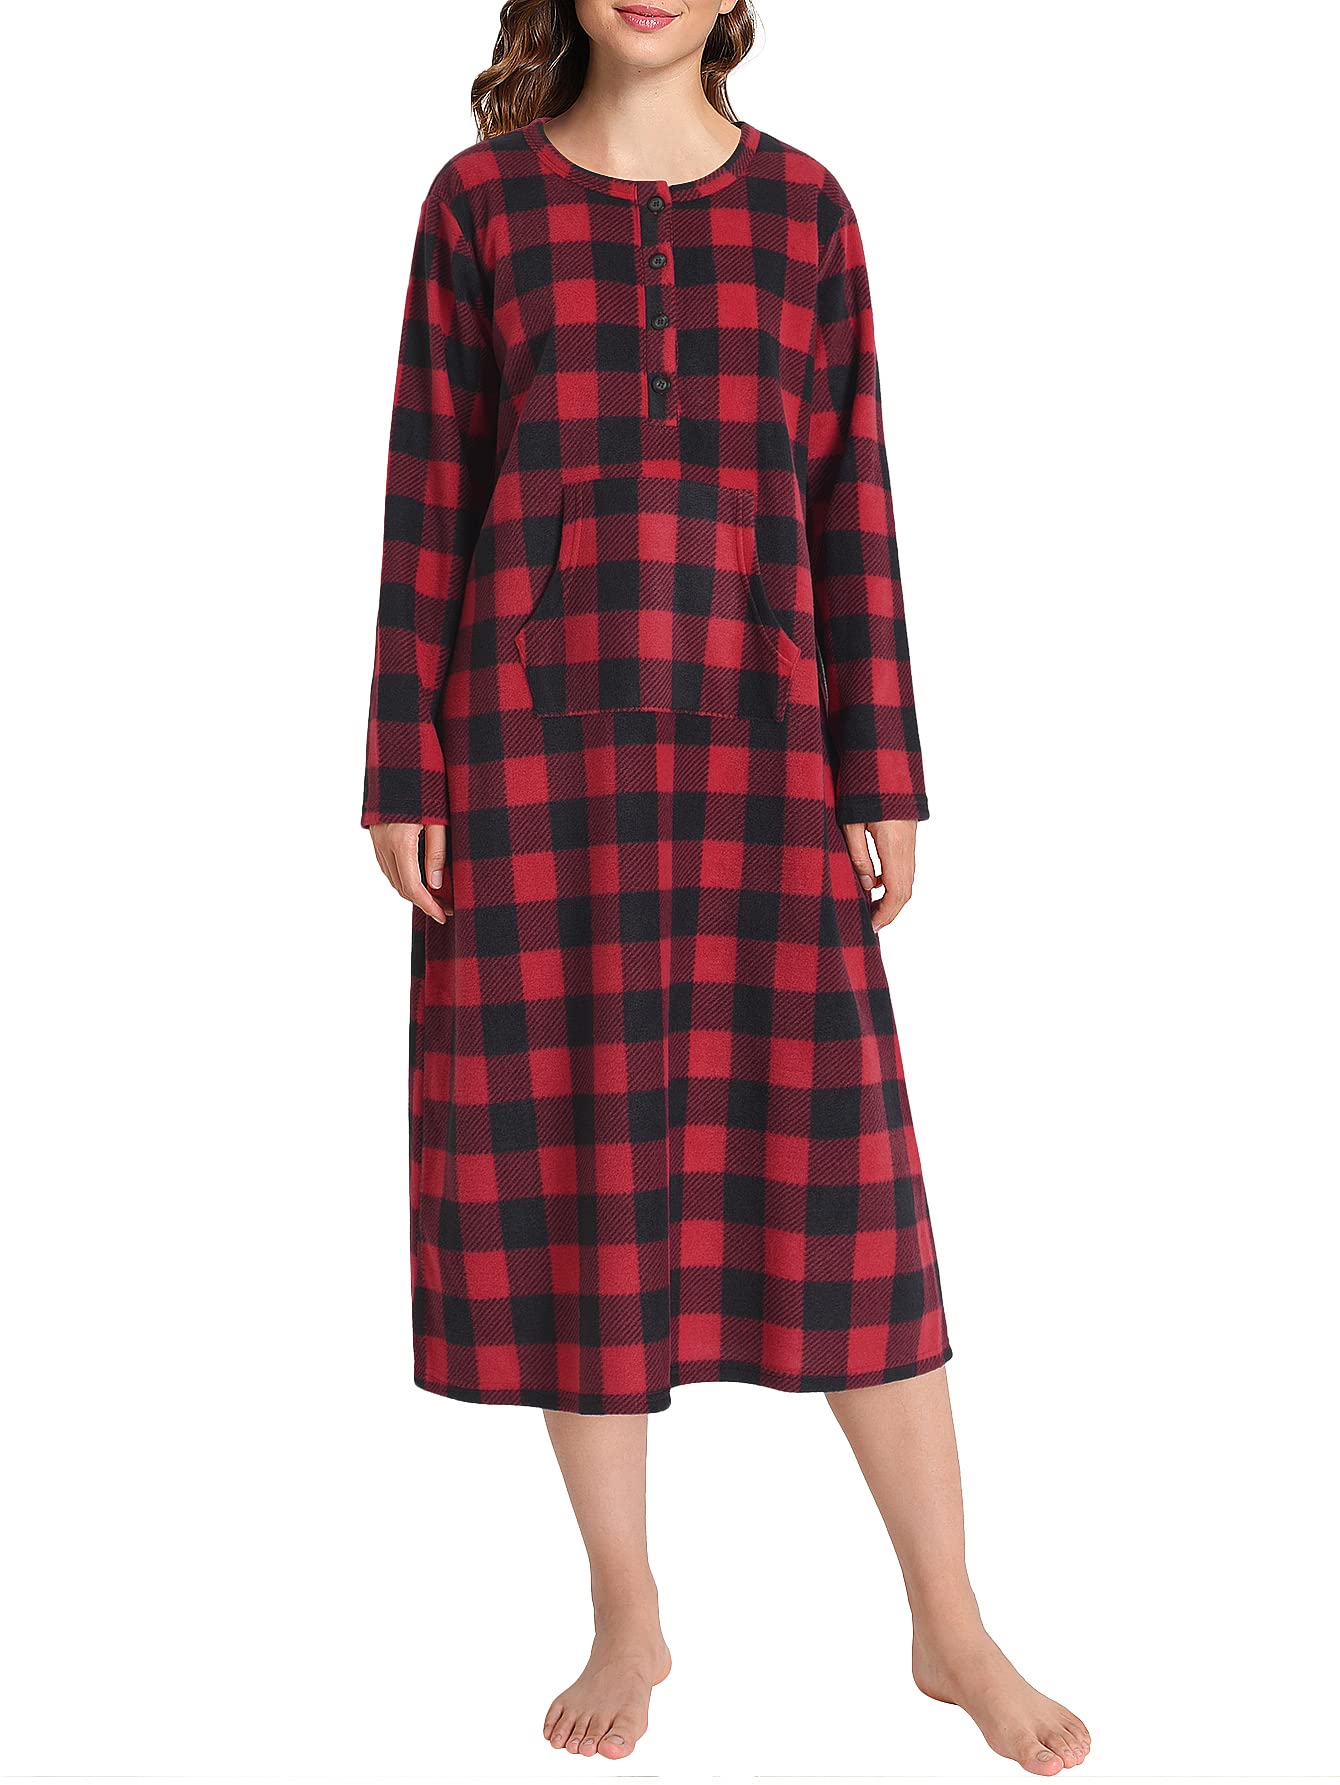 Women's Plaid Fleece Nightgown Warm Long Sleeves Sleep Shirt